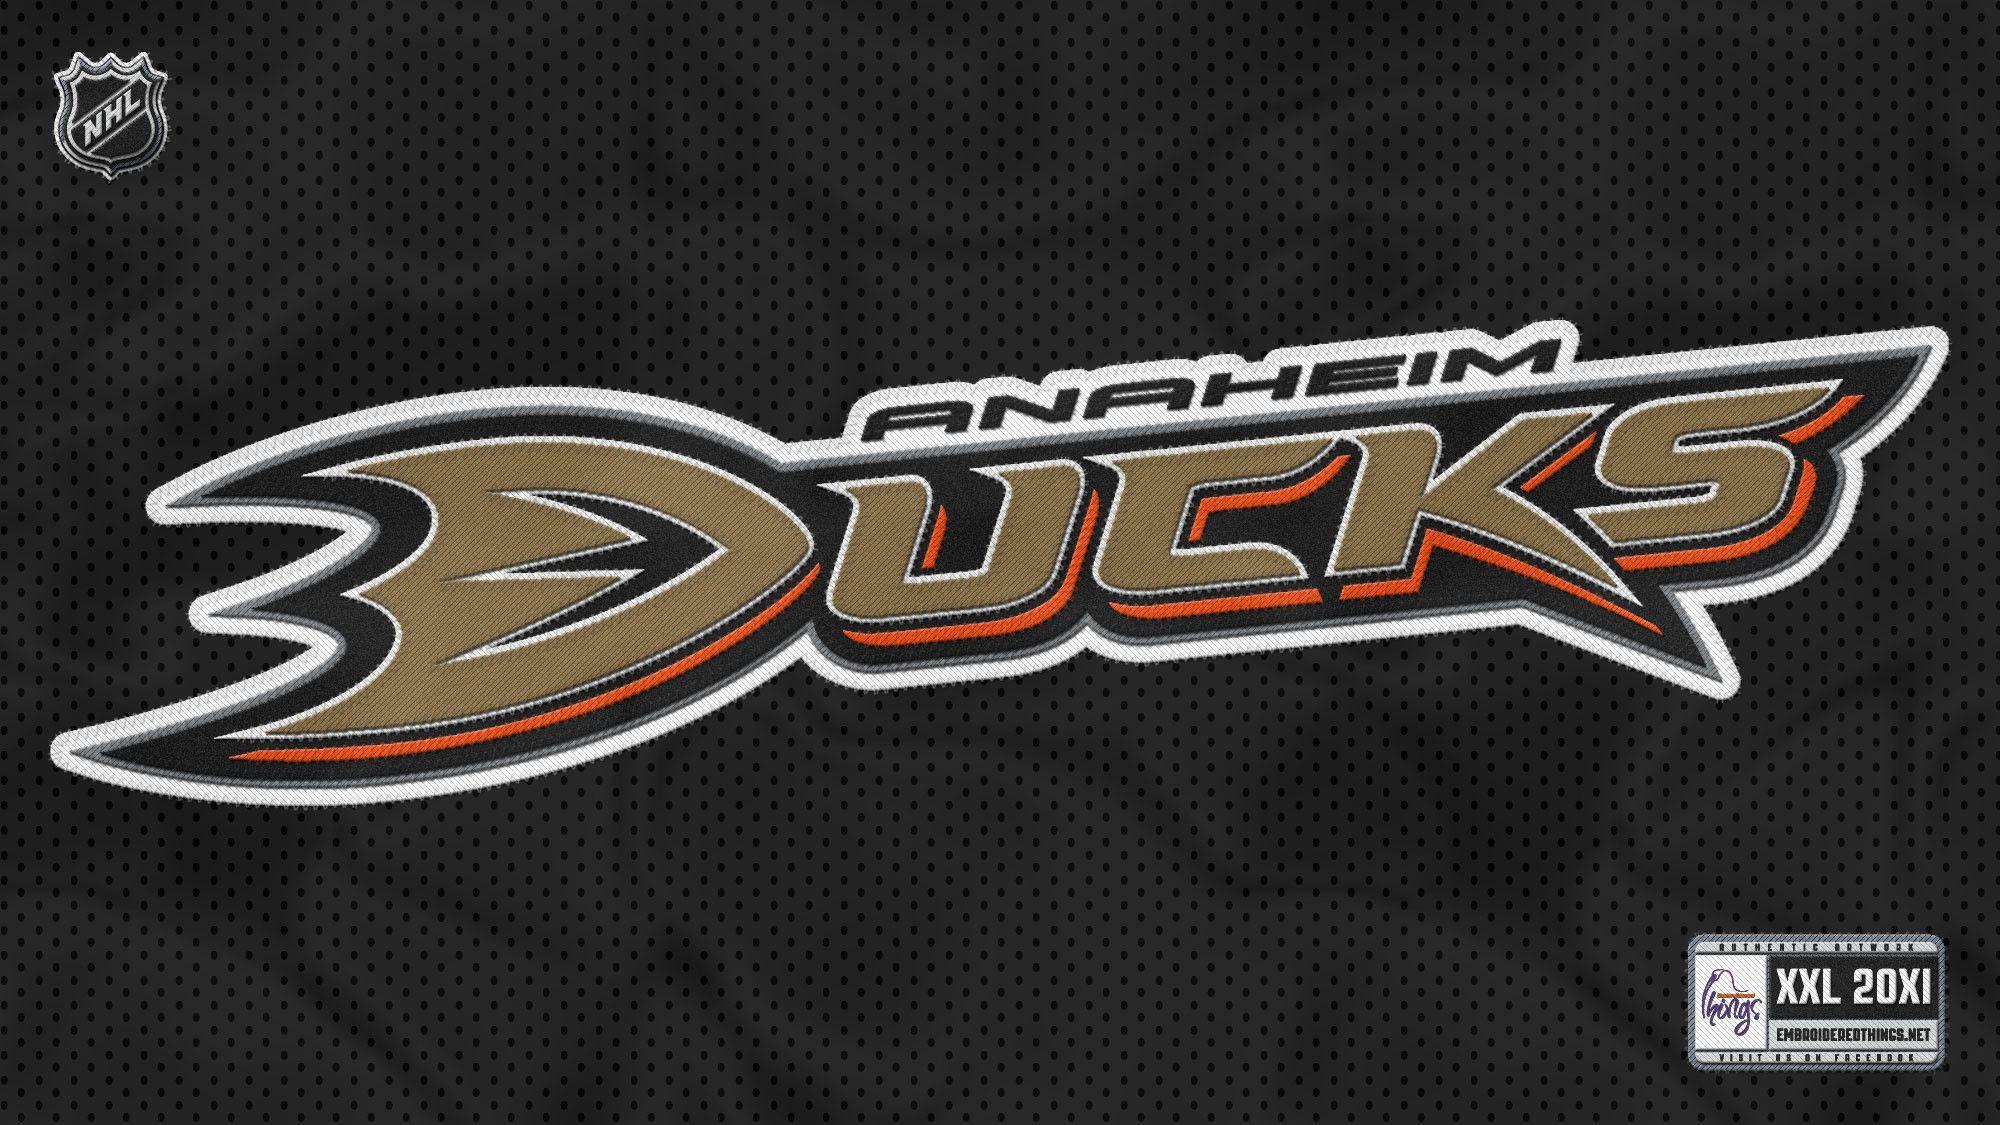 Anaheim Ducks Wallpaper iPhone 5